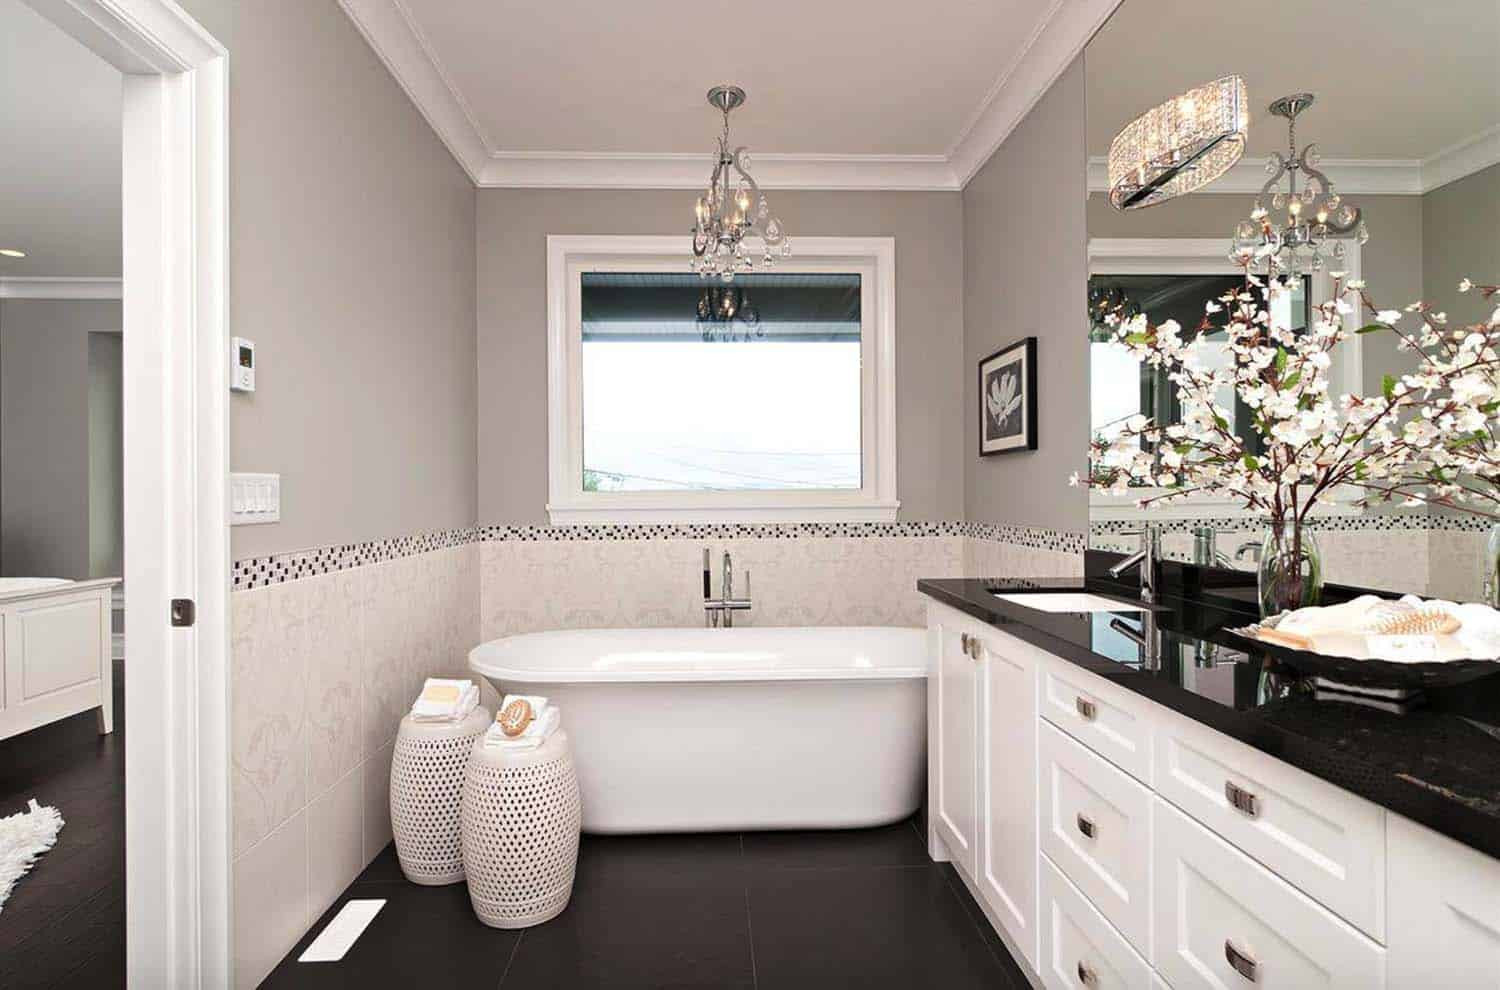 Black And White Bathroom Decor
 25 Incredibly stylish black and white bathroom ideas to